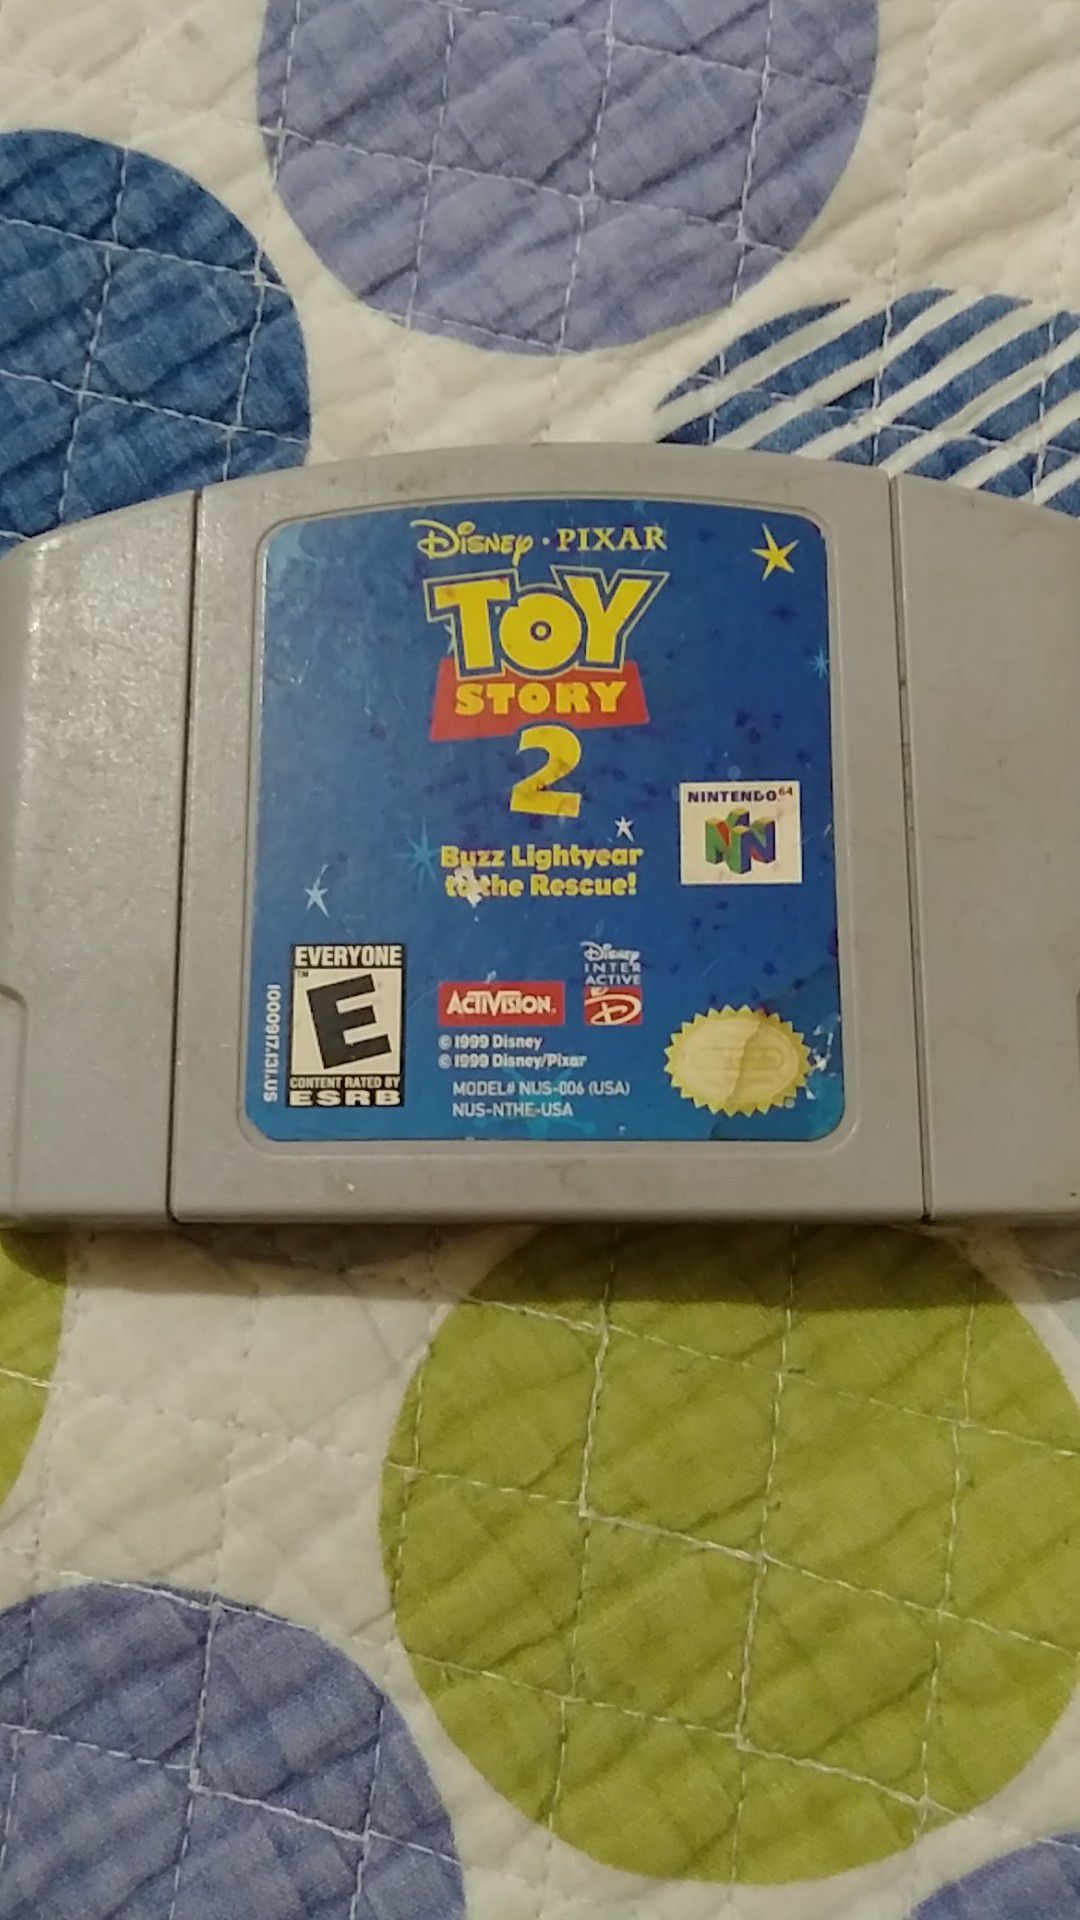 Nintendo 64 Toy Story 2